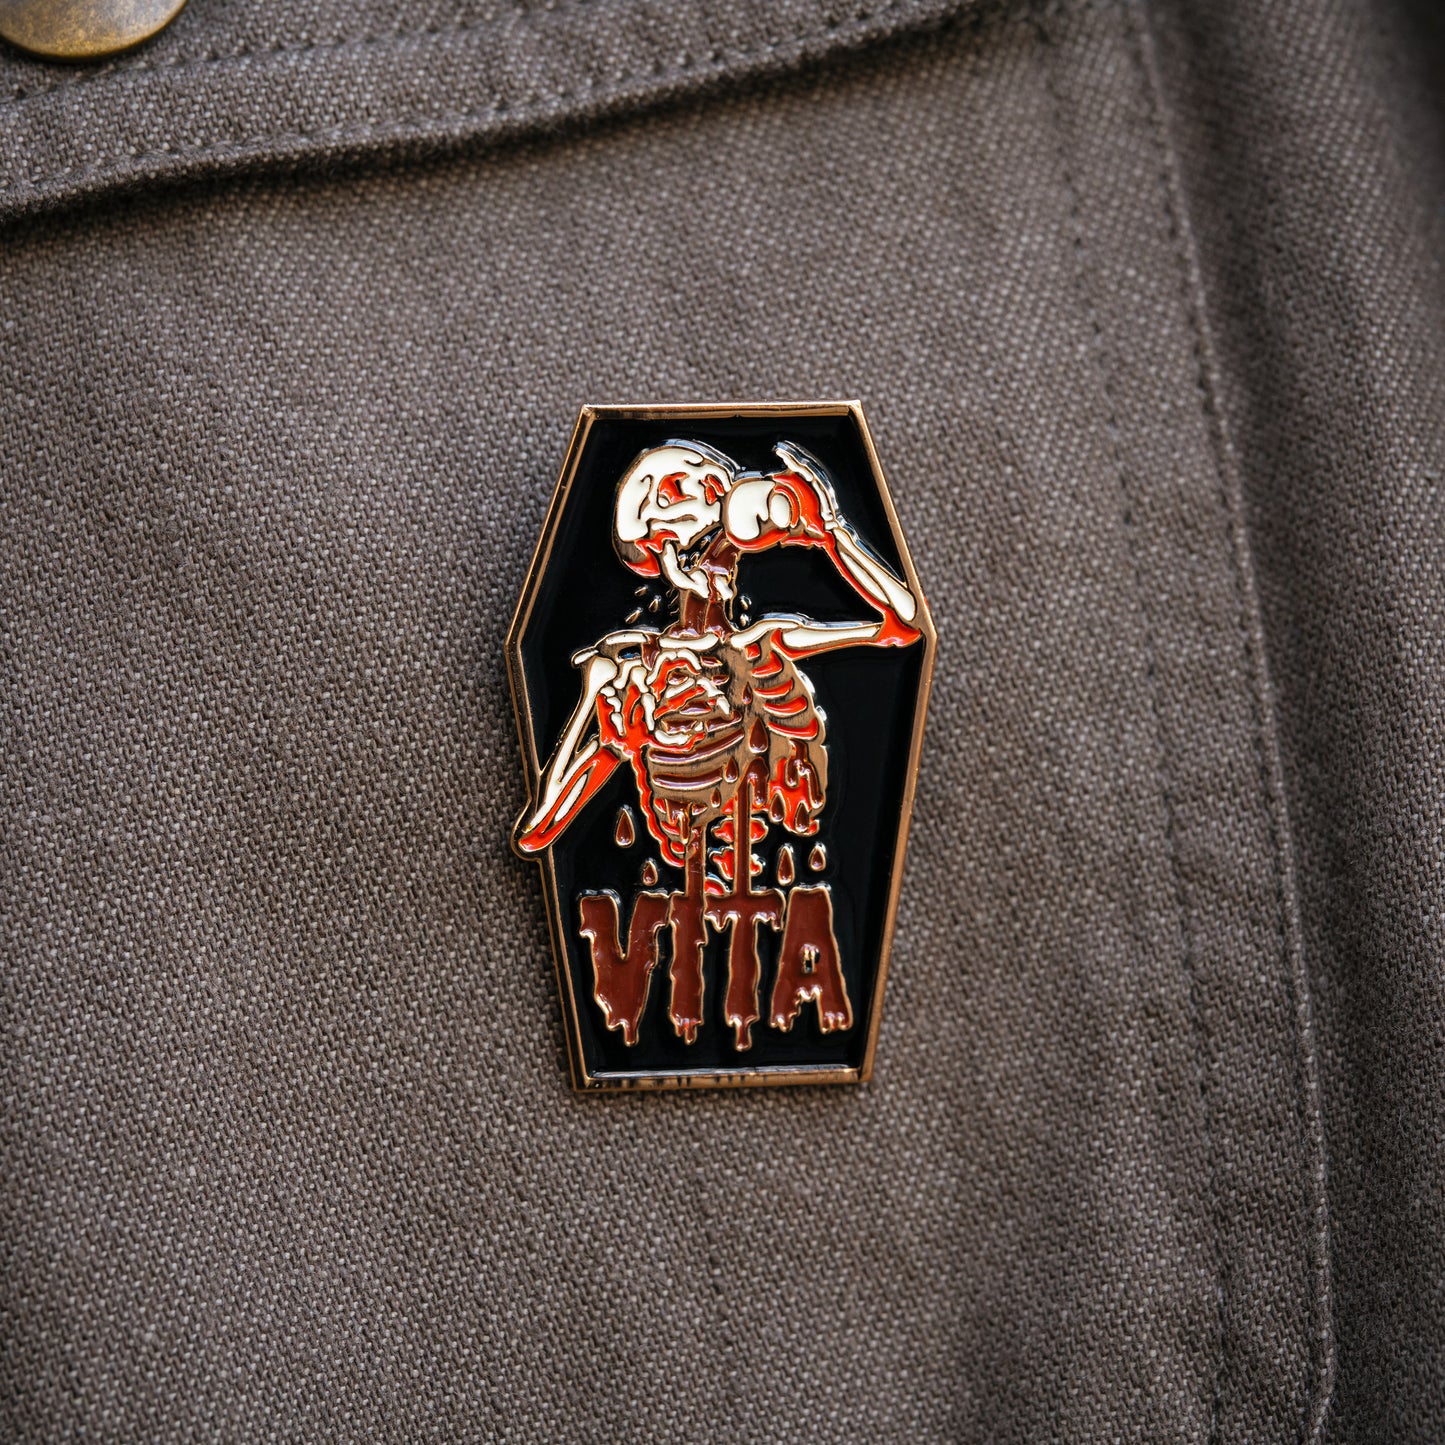 Image: skeleton enamel pin on jacket pocket. 